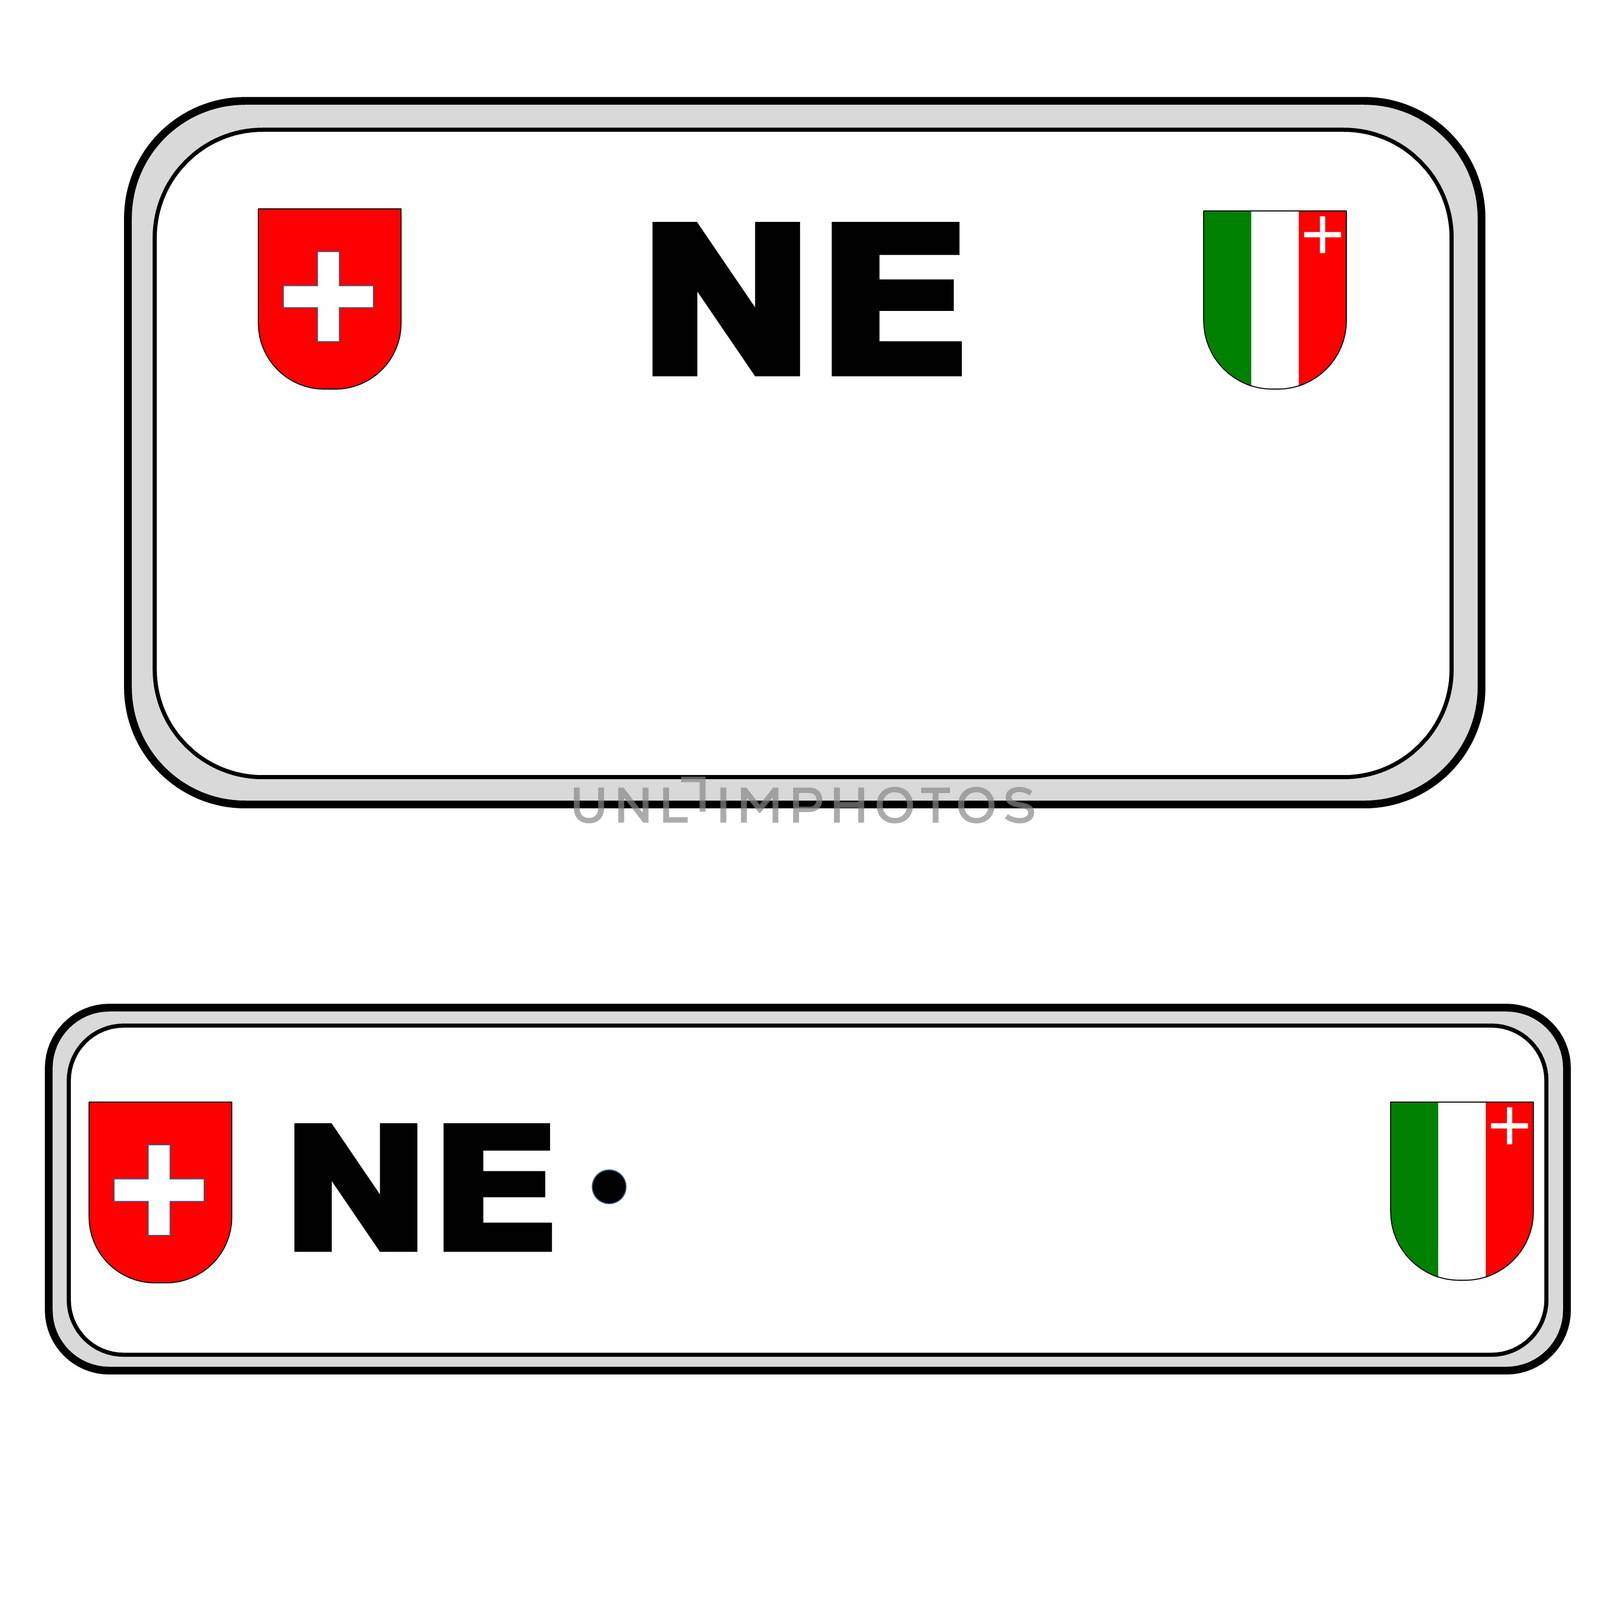 Neuchatel plate number, Switzerland by Elenaphotos21